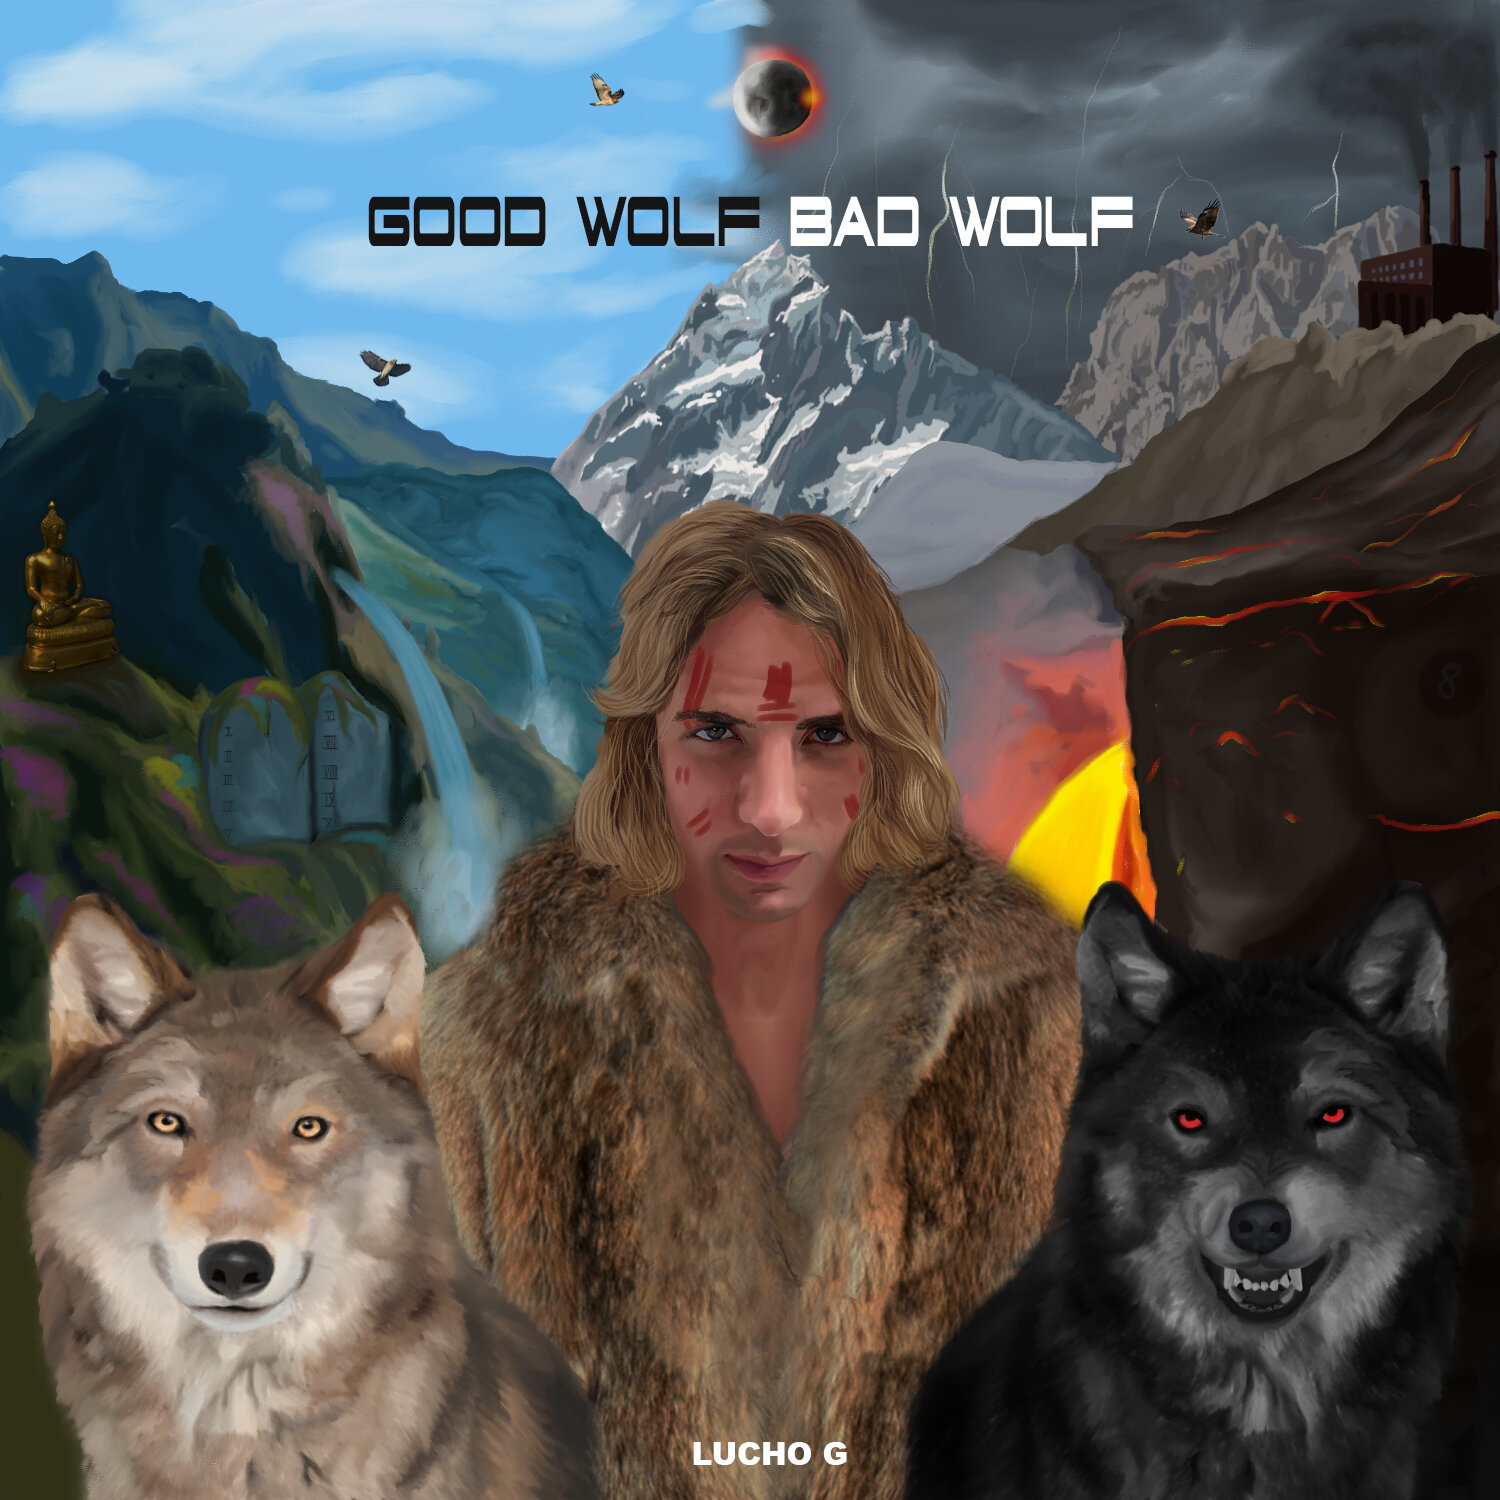 Good wolf bad wolf artwork